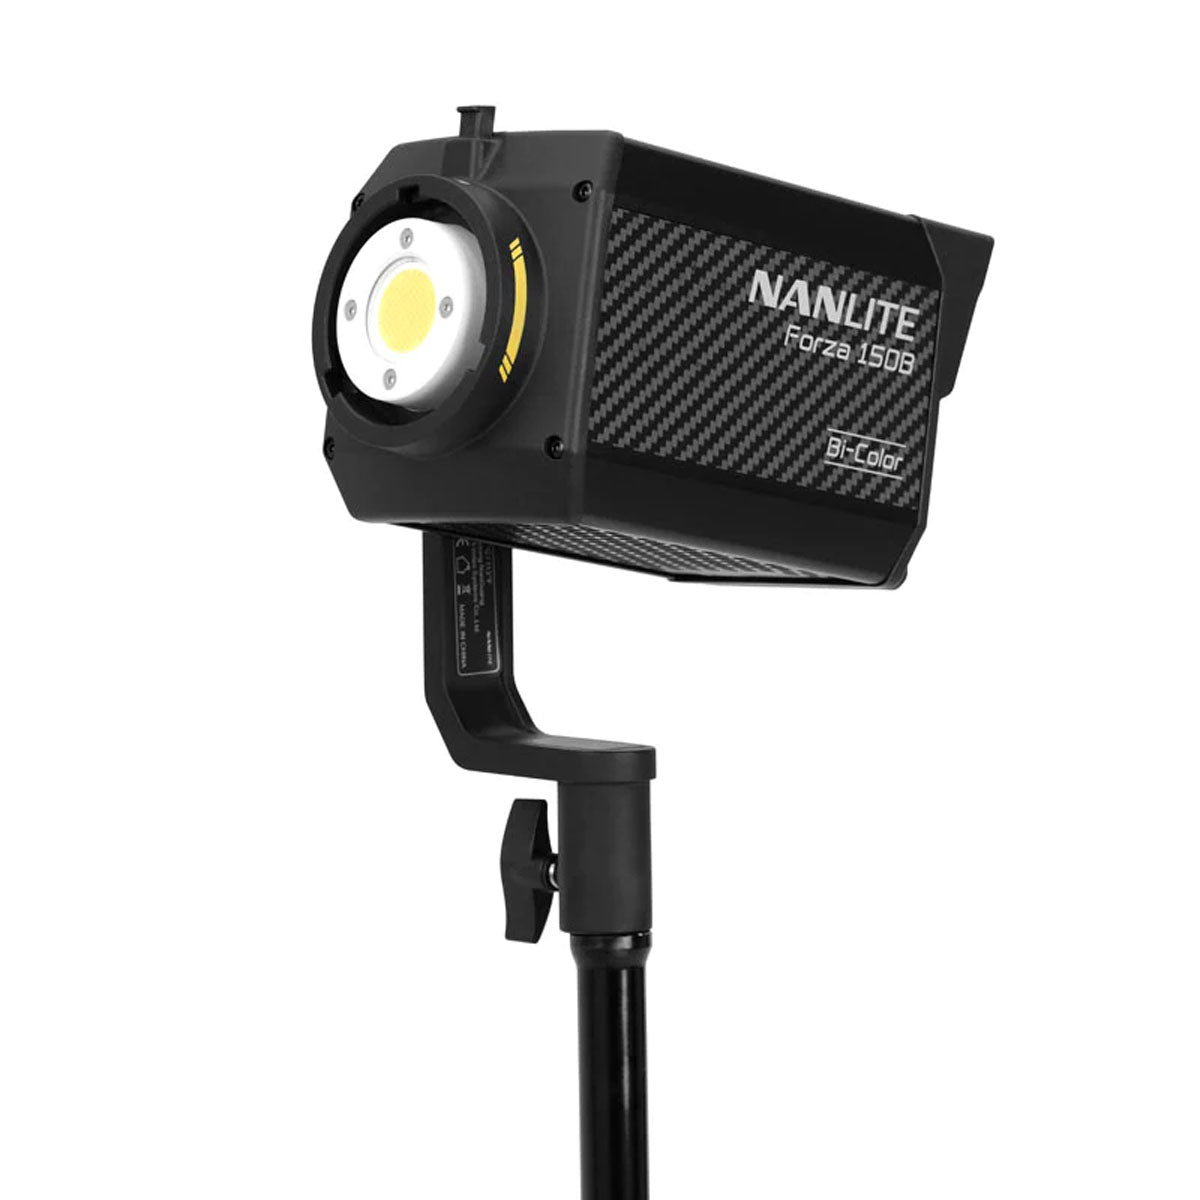 NANLITE(ナンライト) LEDライト Forza-150B (12-2042)